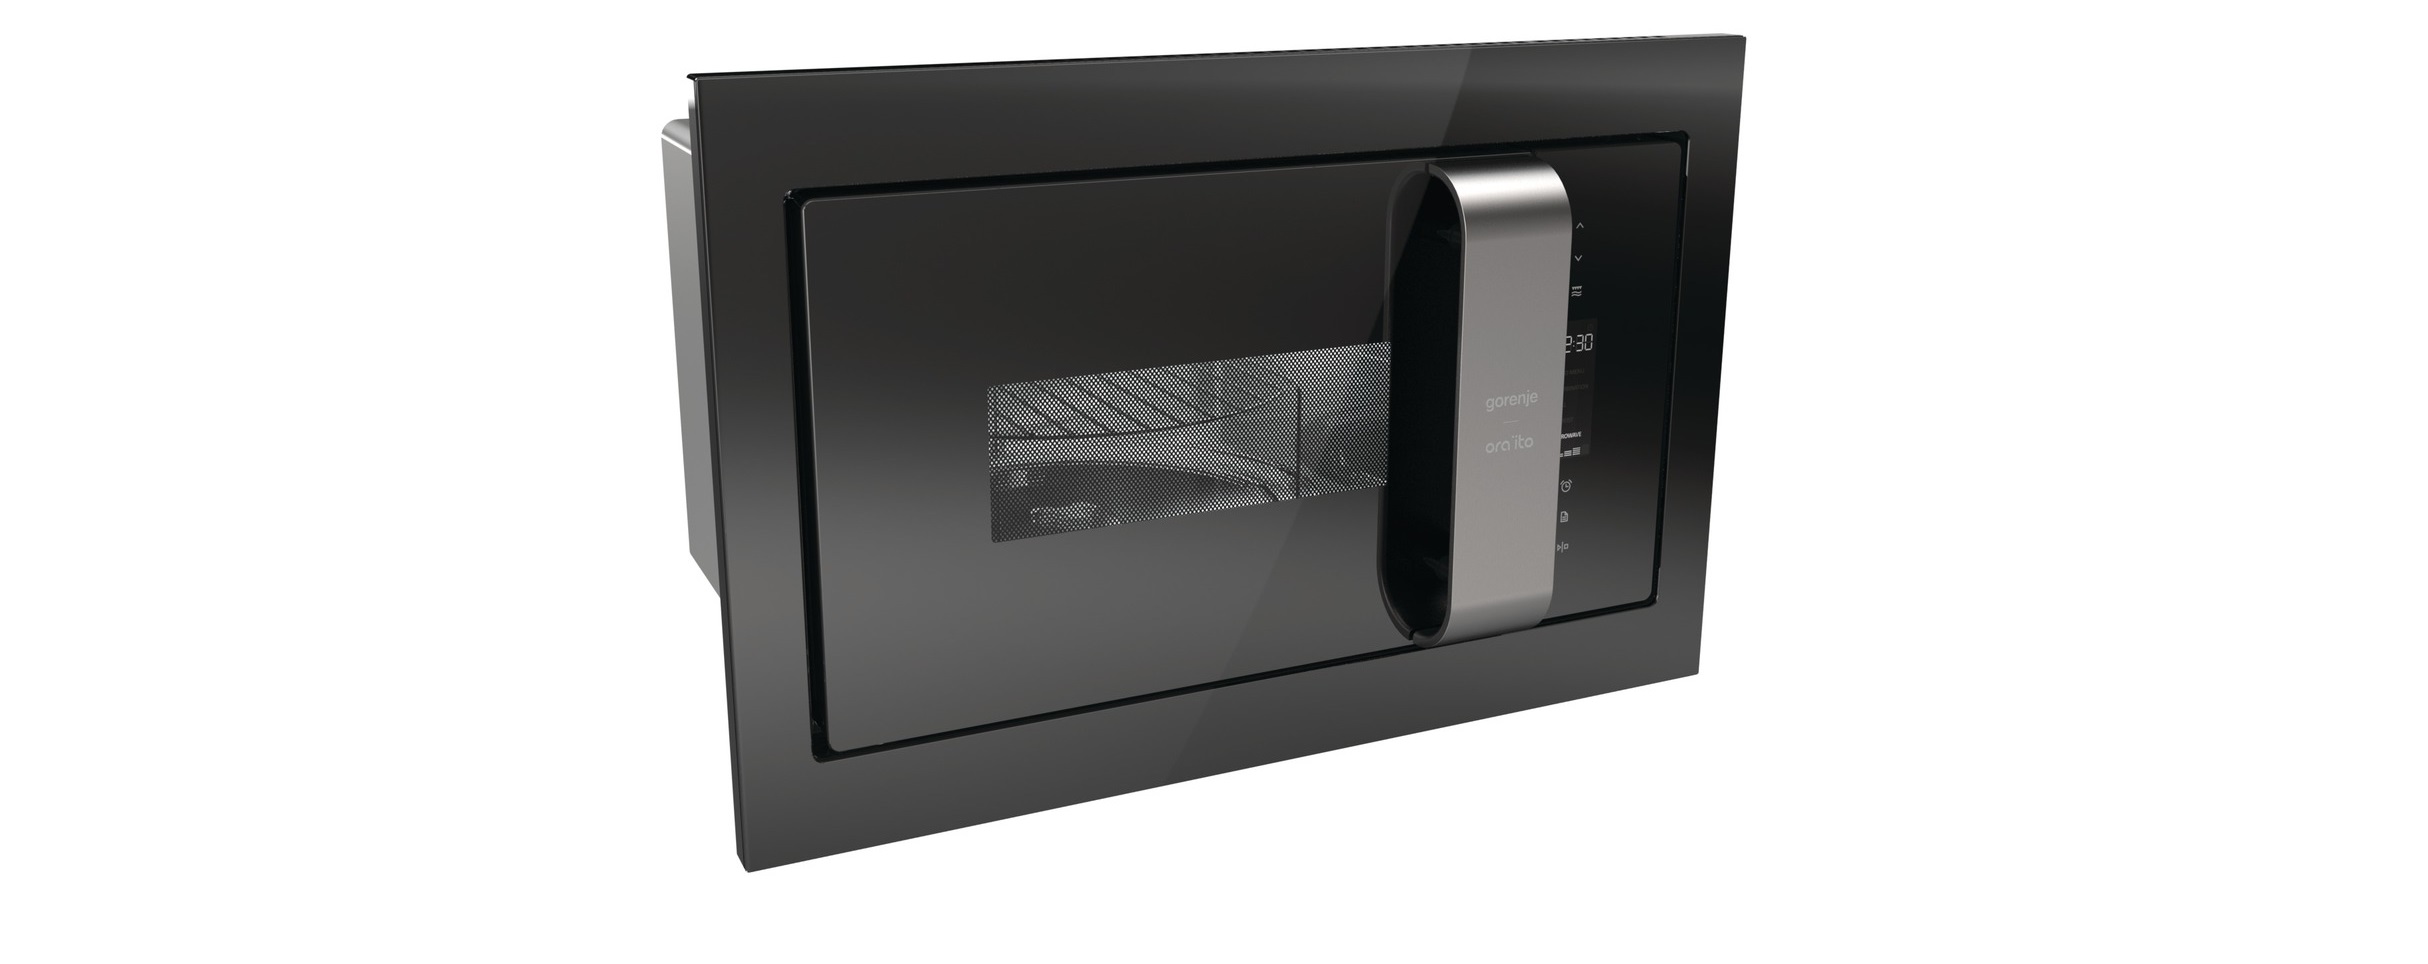 Gorenje Built-In Electric Digital Microwave - cm, With Black Grill, Liters, 23 60 BM235ORAB